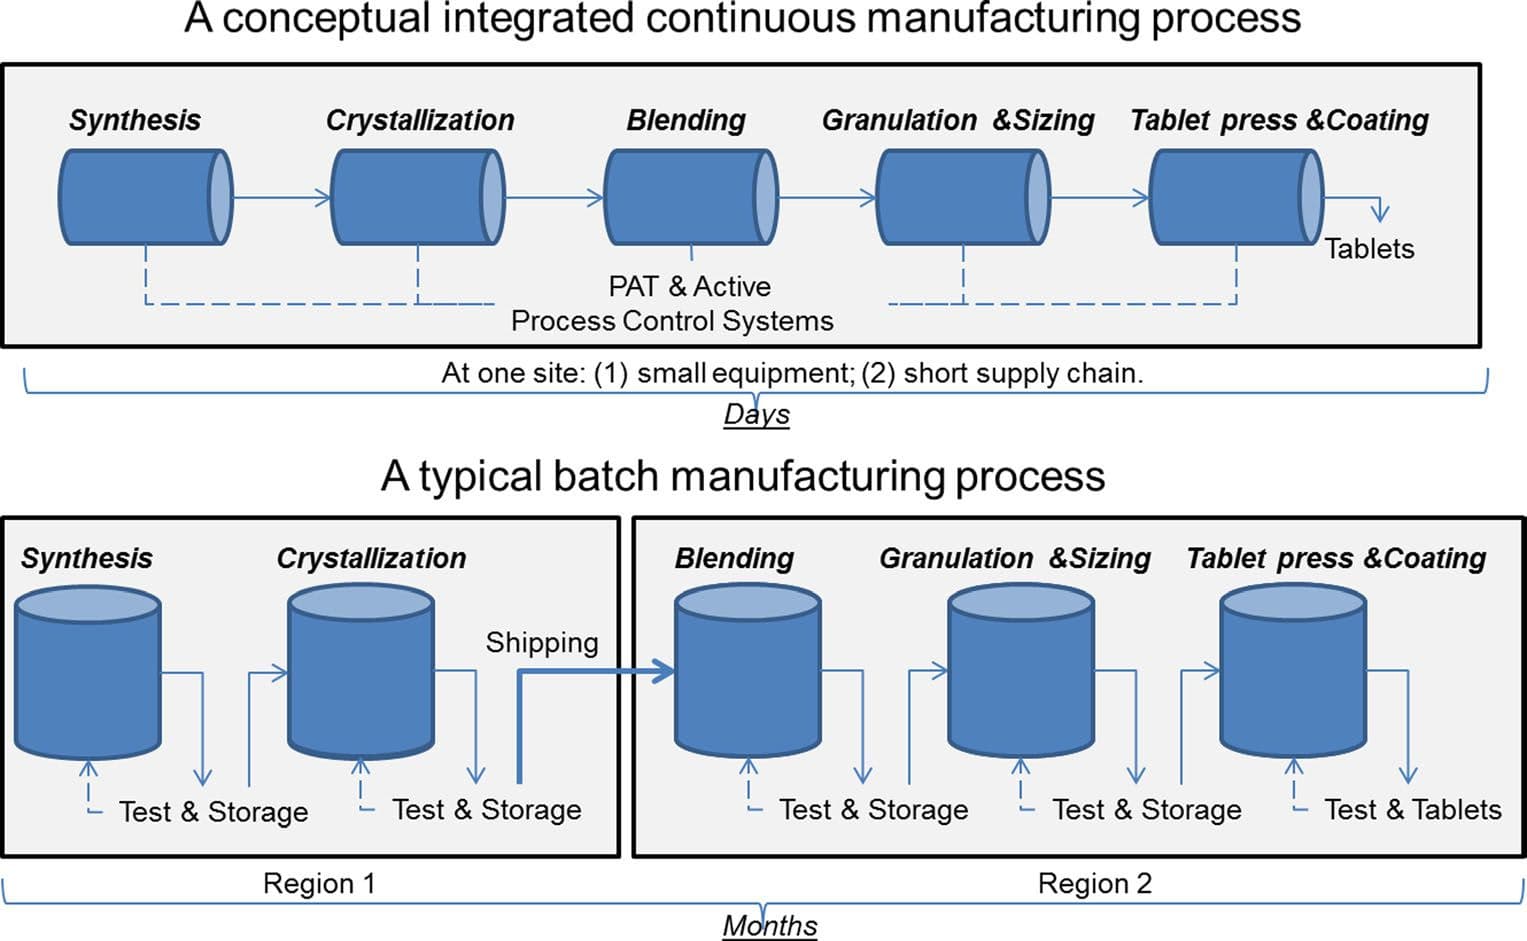 conceptual continuous manufacturing vs batch manufacturing process